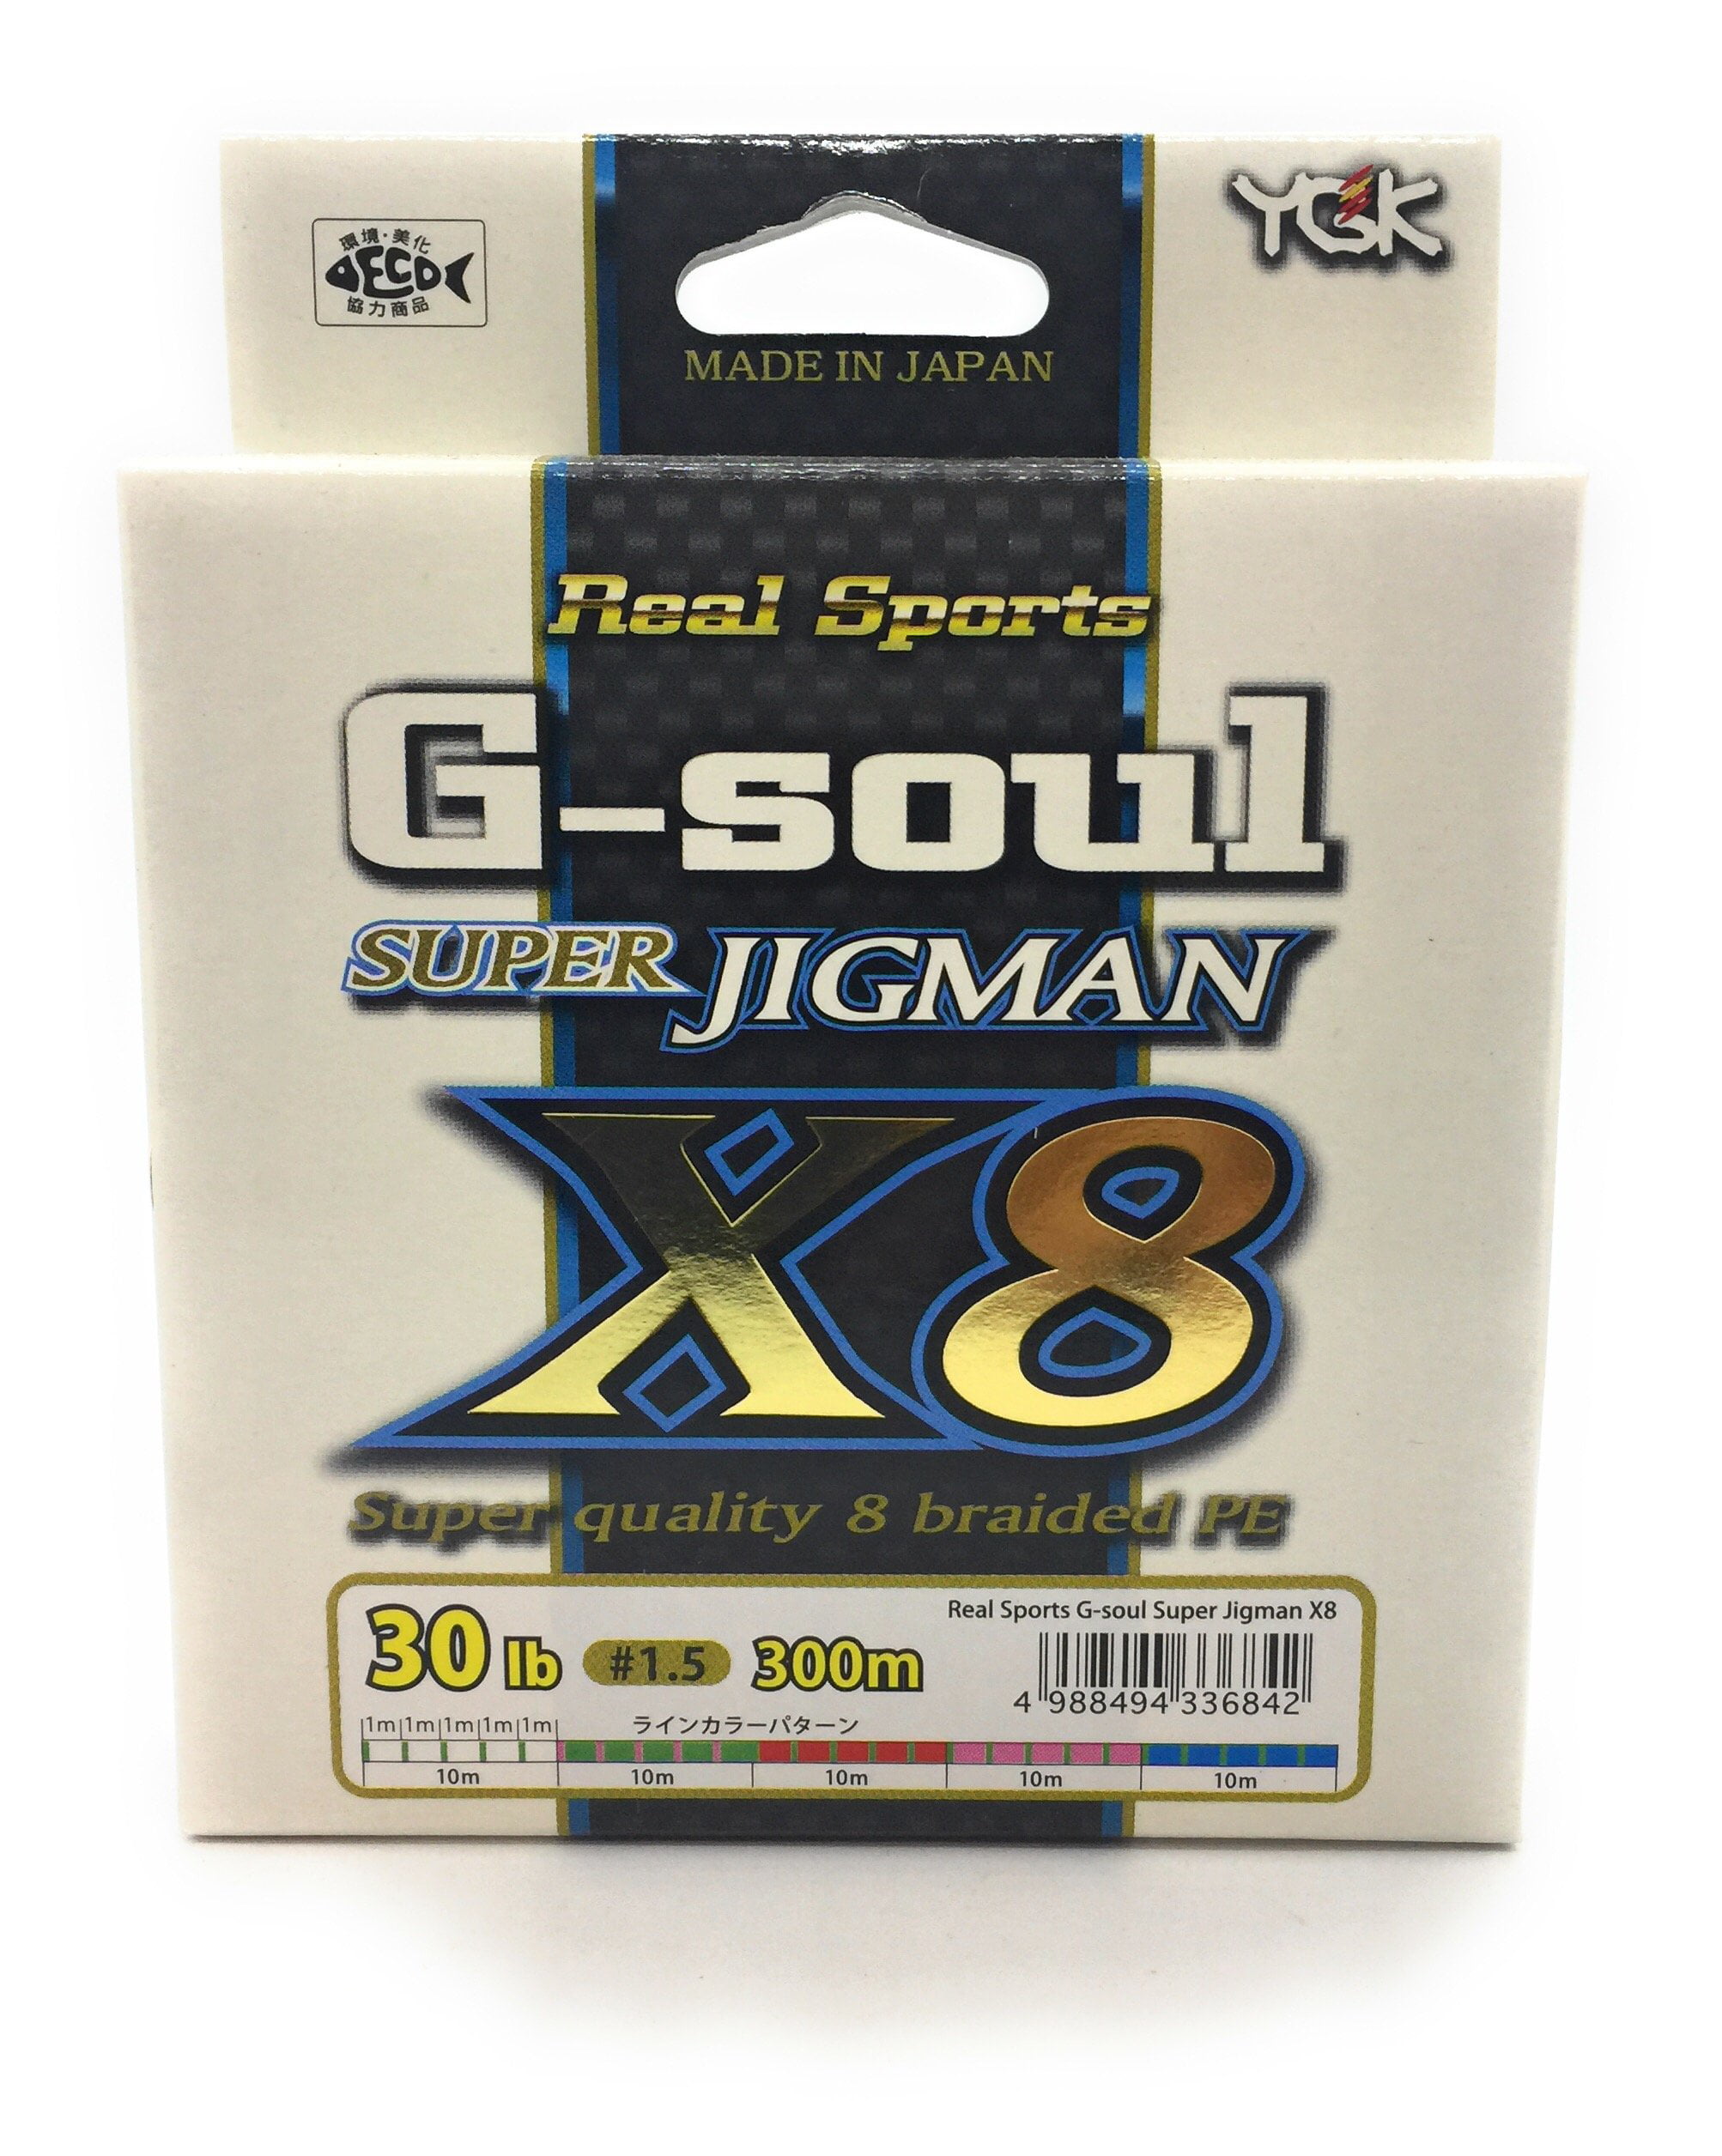 Tresse Real Sports G-soul Super Jigman